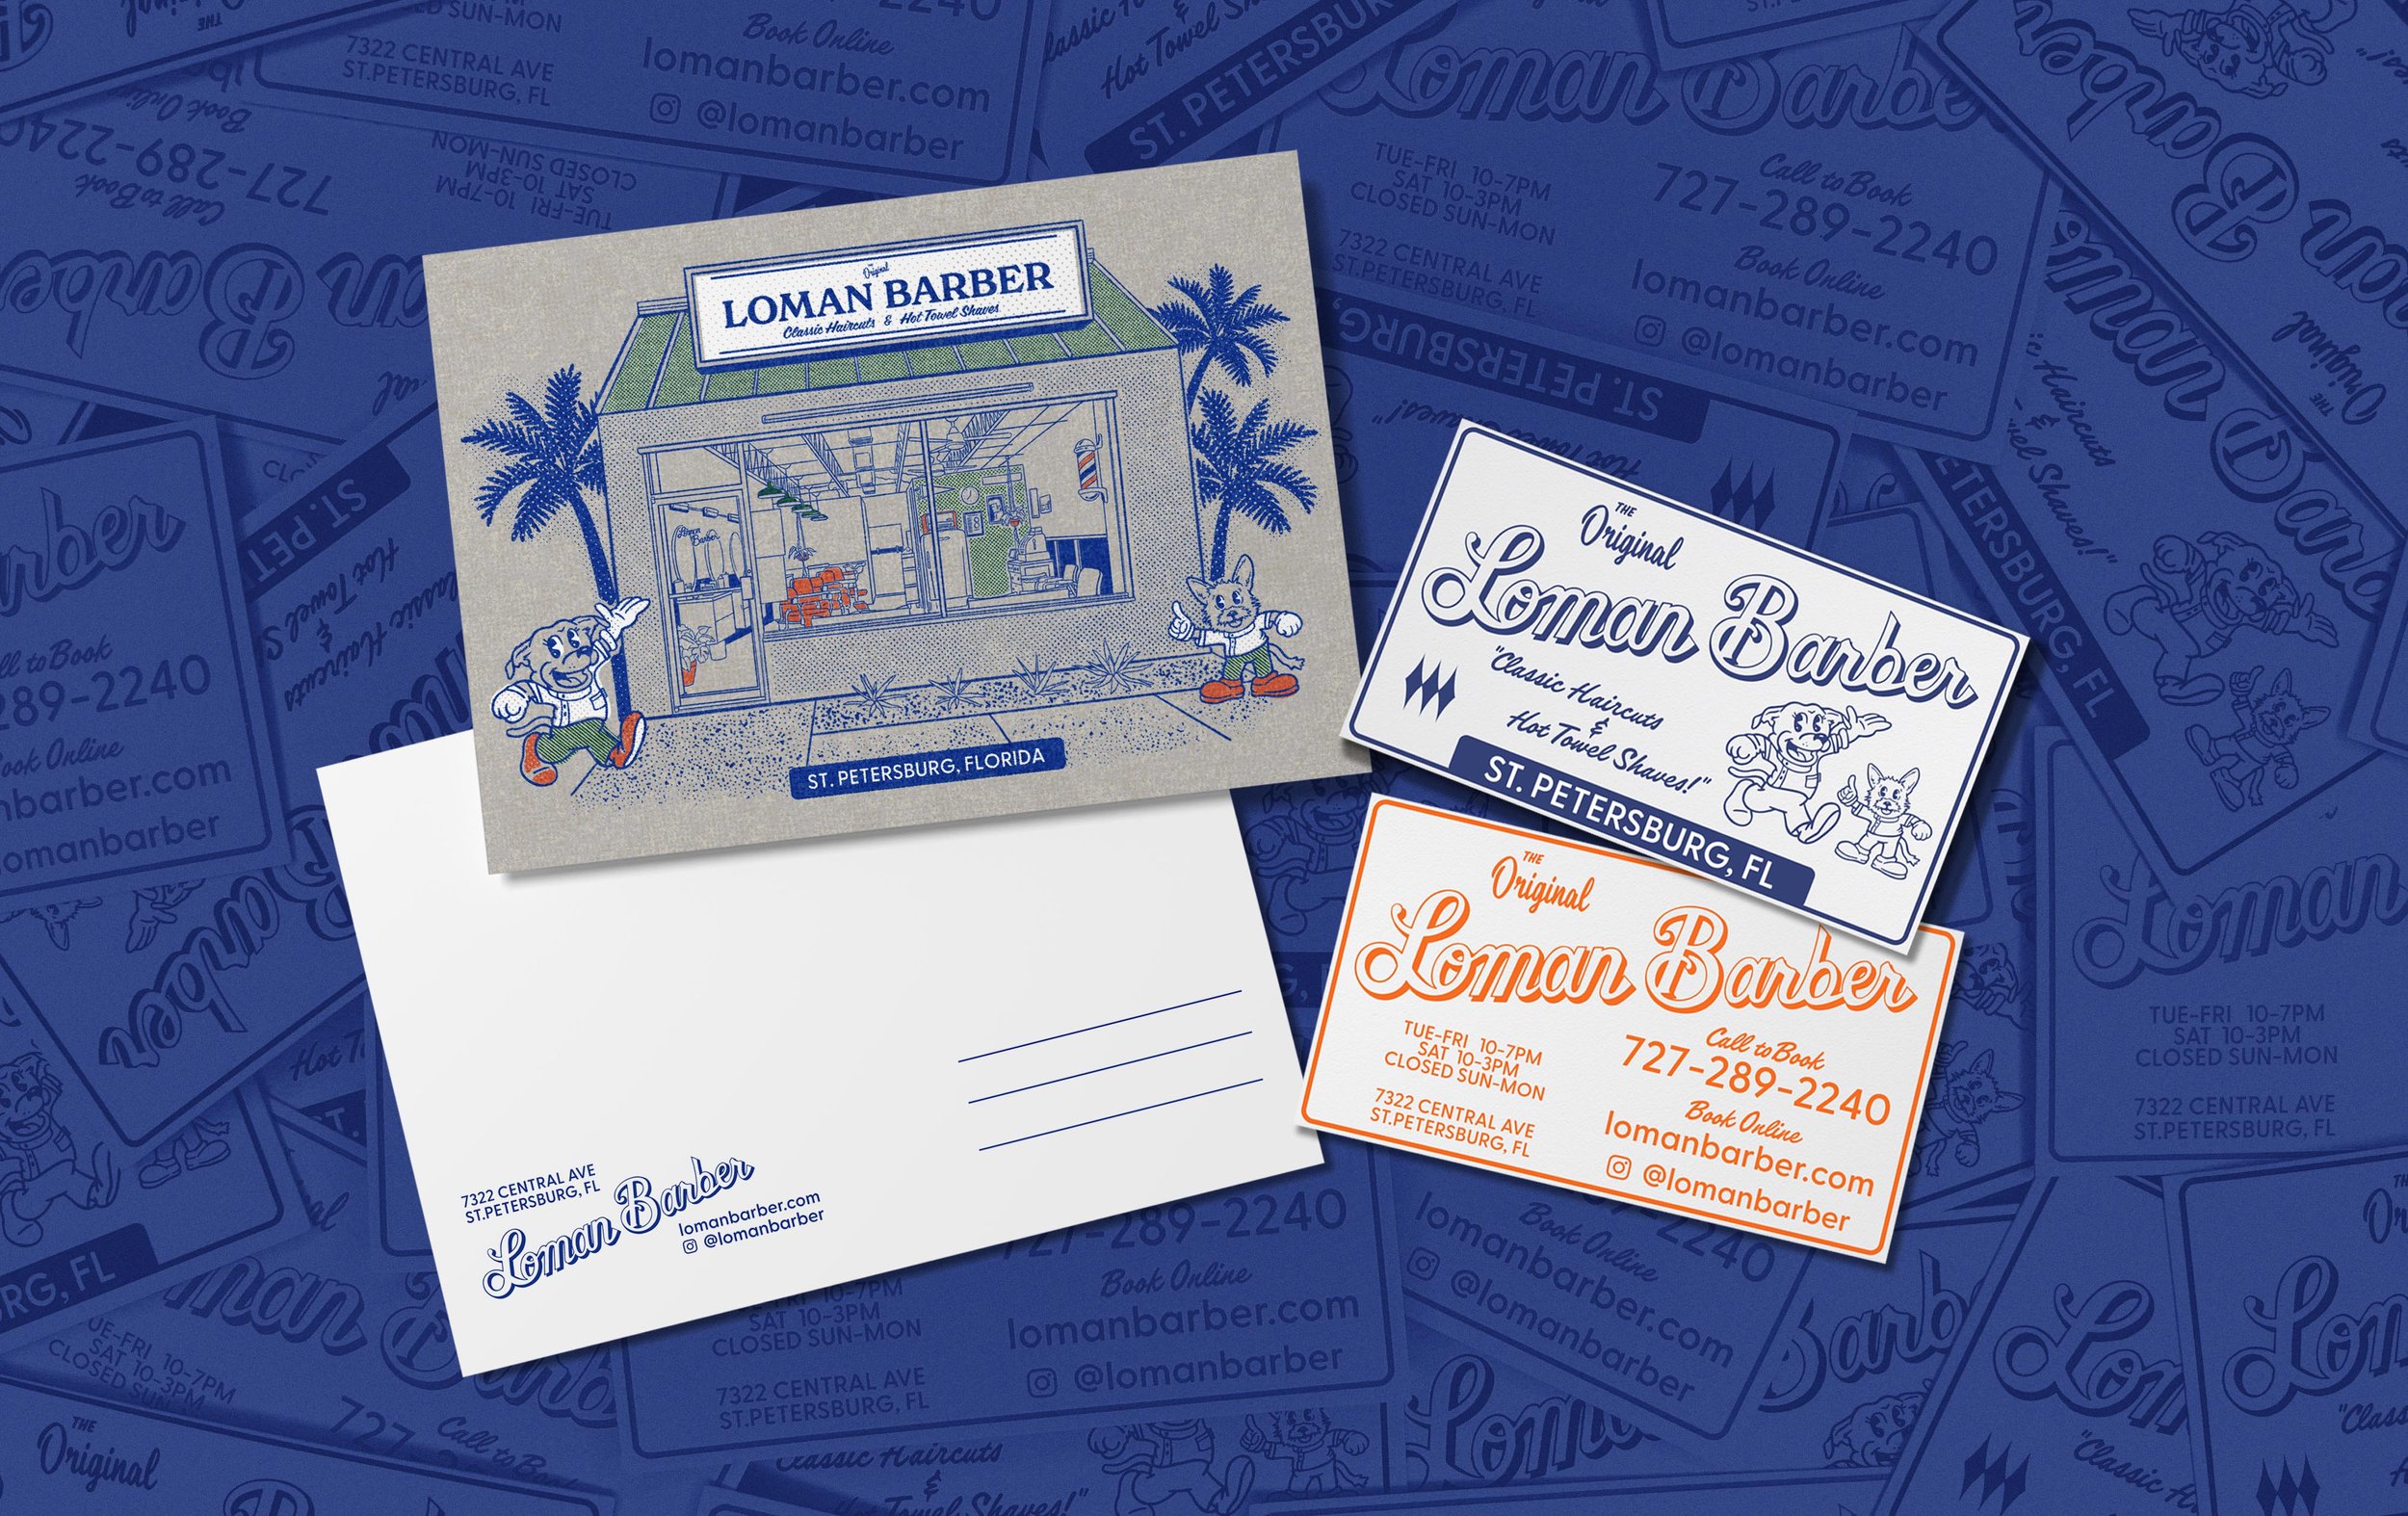 LB Postcard and Business Card.jpg